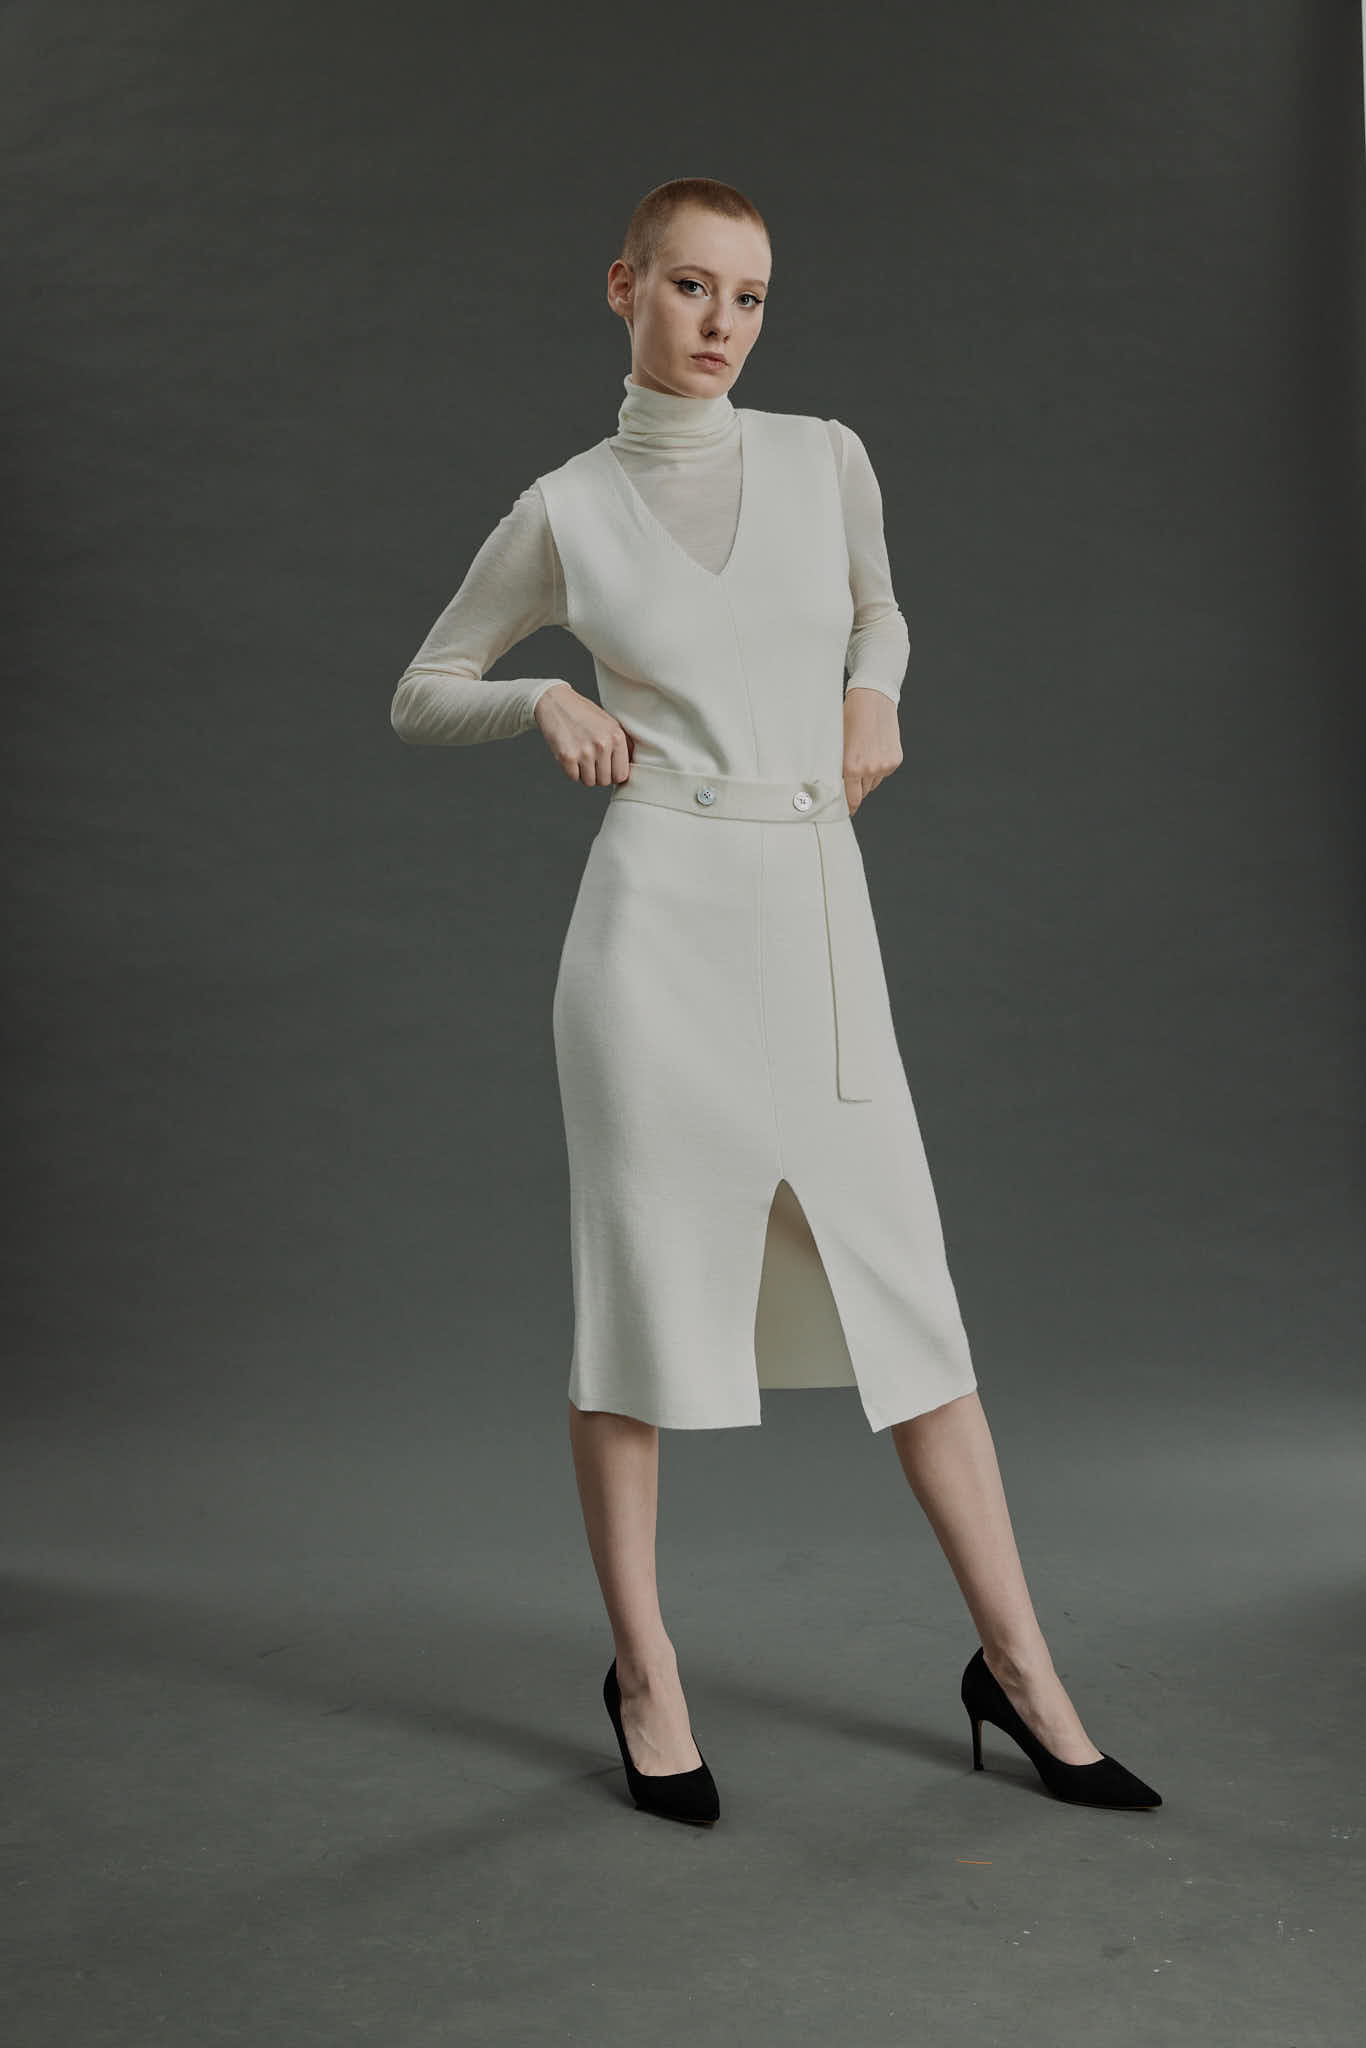 Porto Knit Dress – Knit V-neck dress in black white0